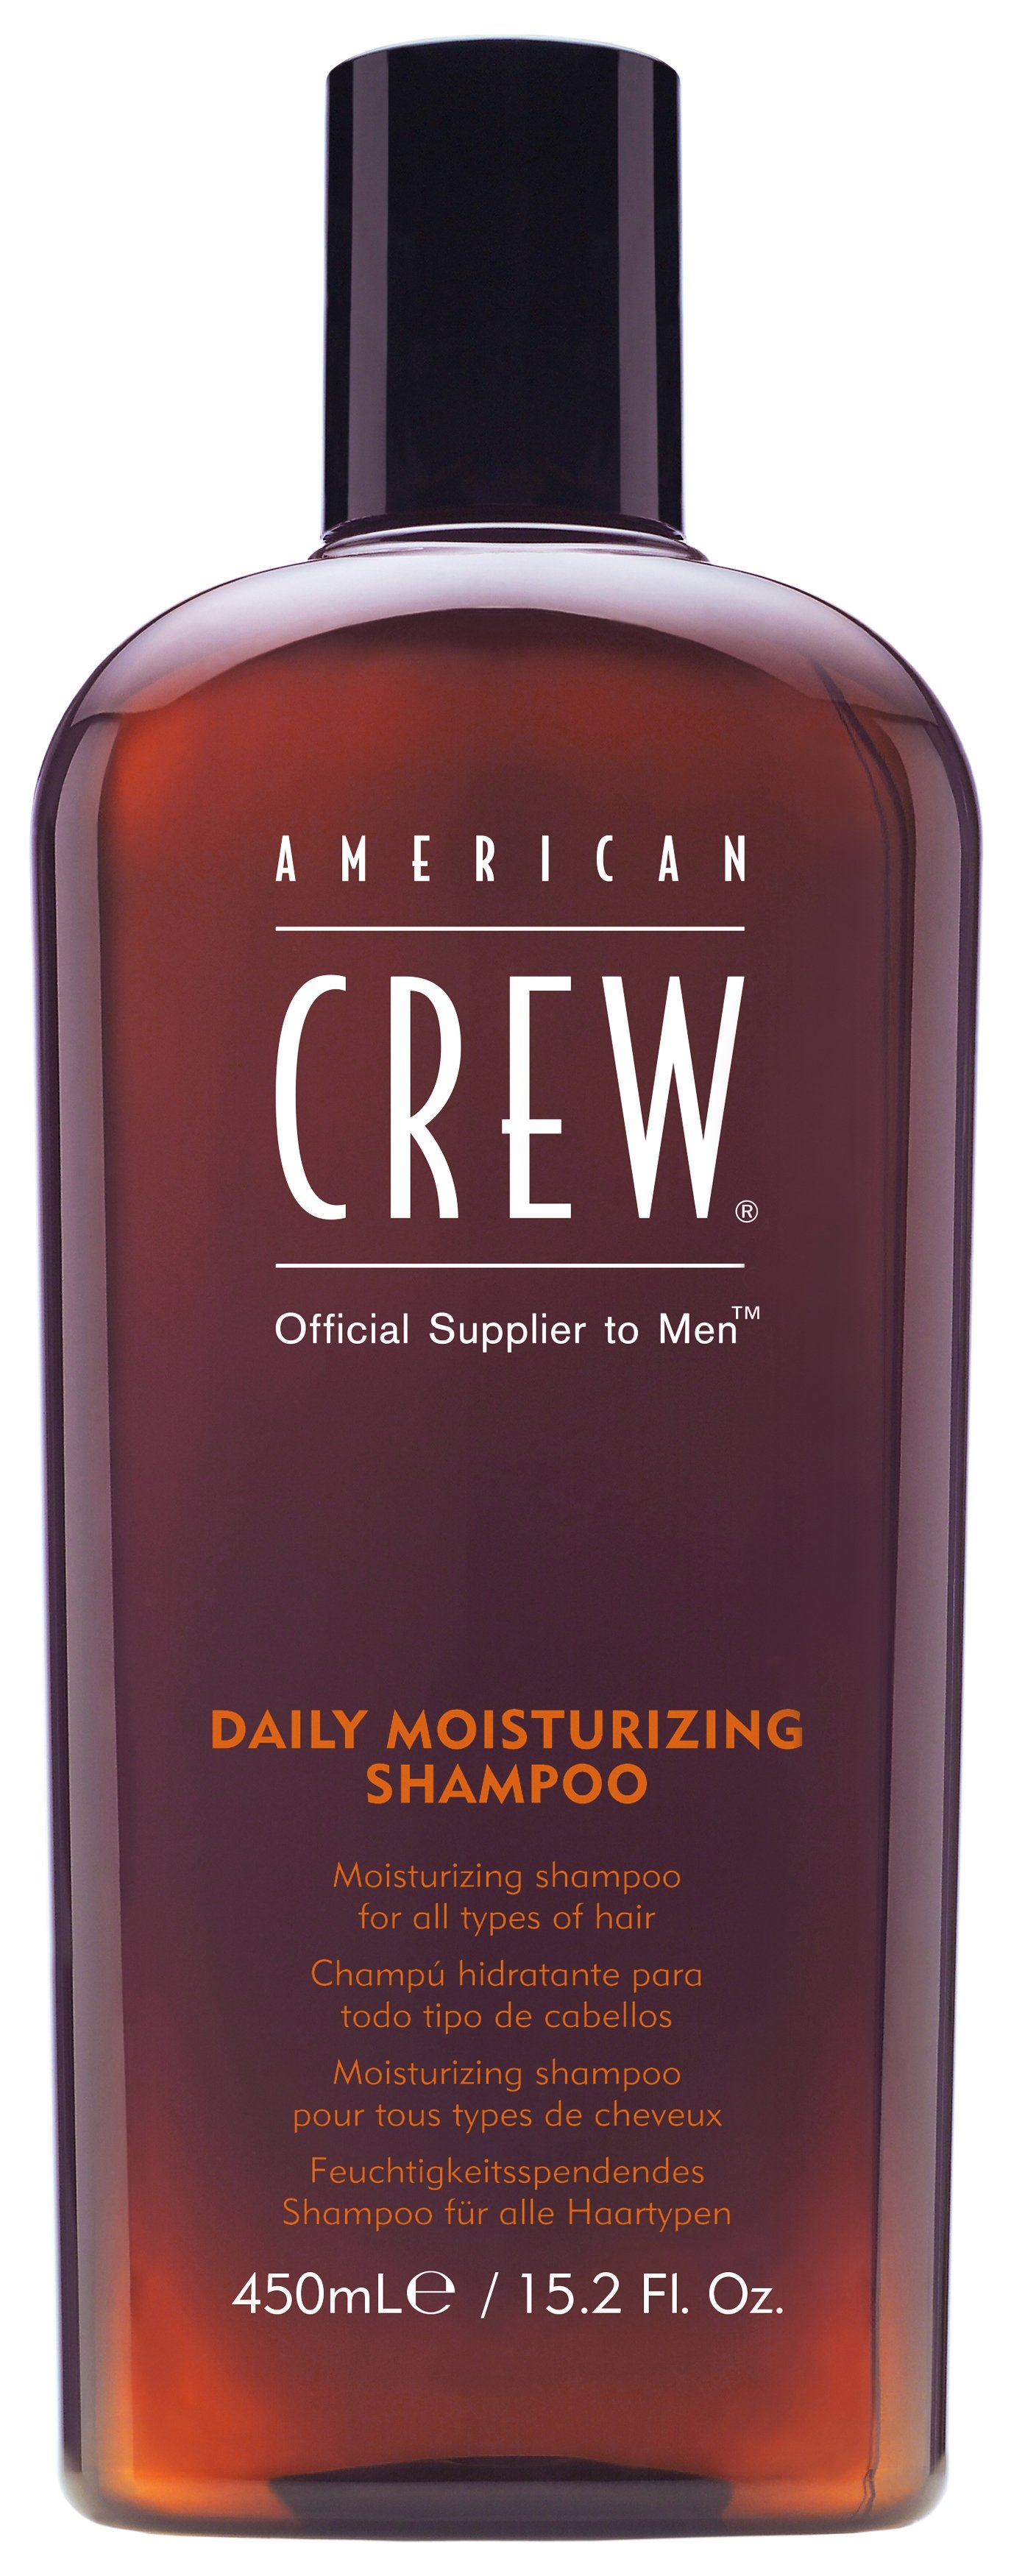 Мужские шампуни:  AMERICAN CREW -  Увлажняющий шампунь для ежедневного ухода за волосами American Crew Daily Moisturizing Shampoo (450 мл) (450 мл)